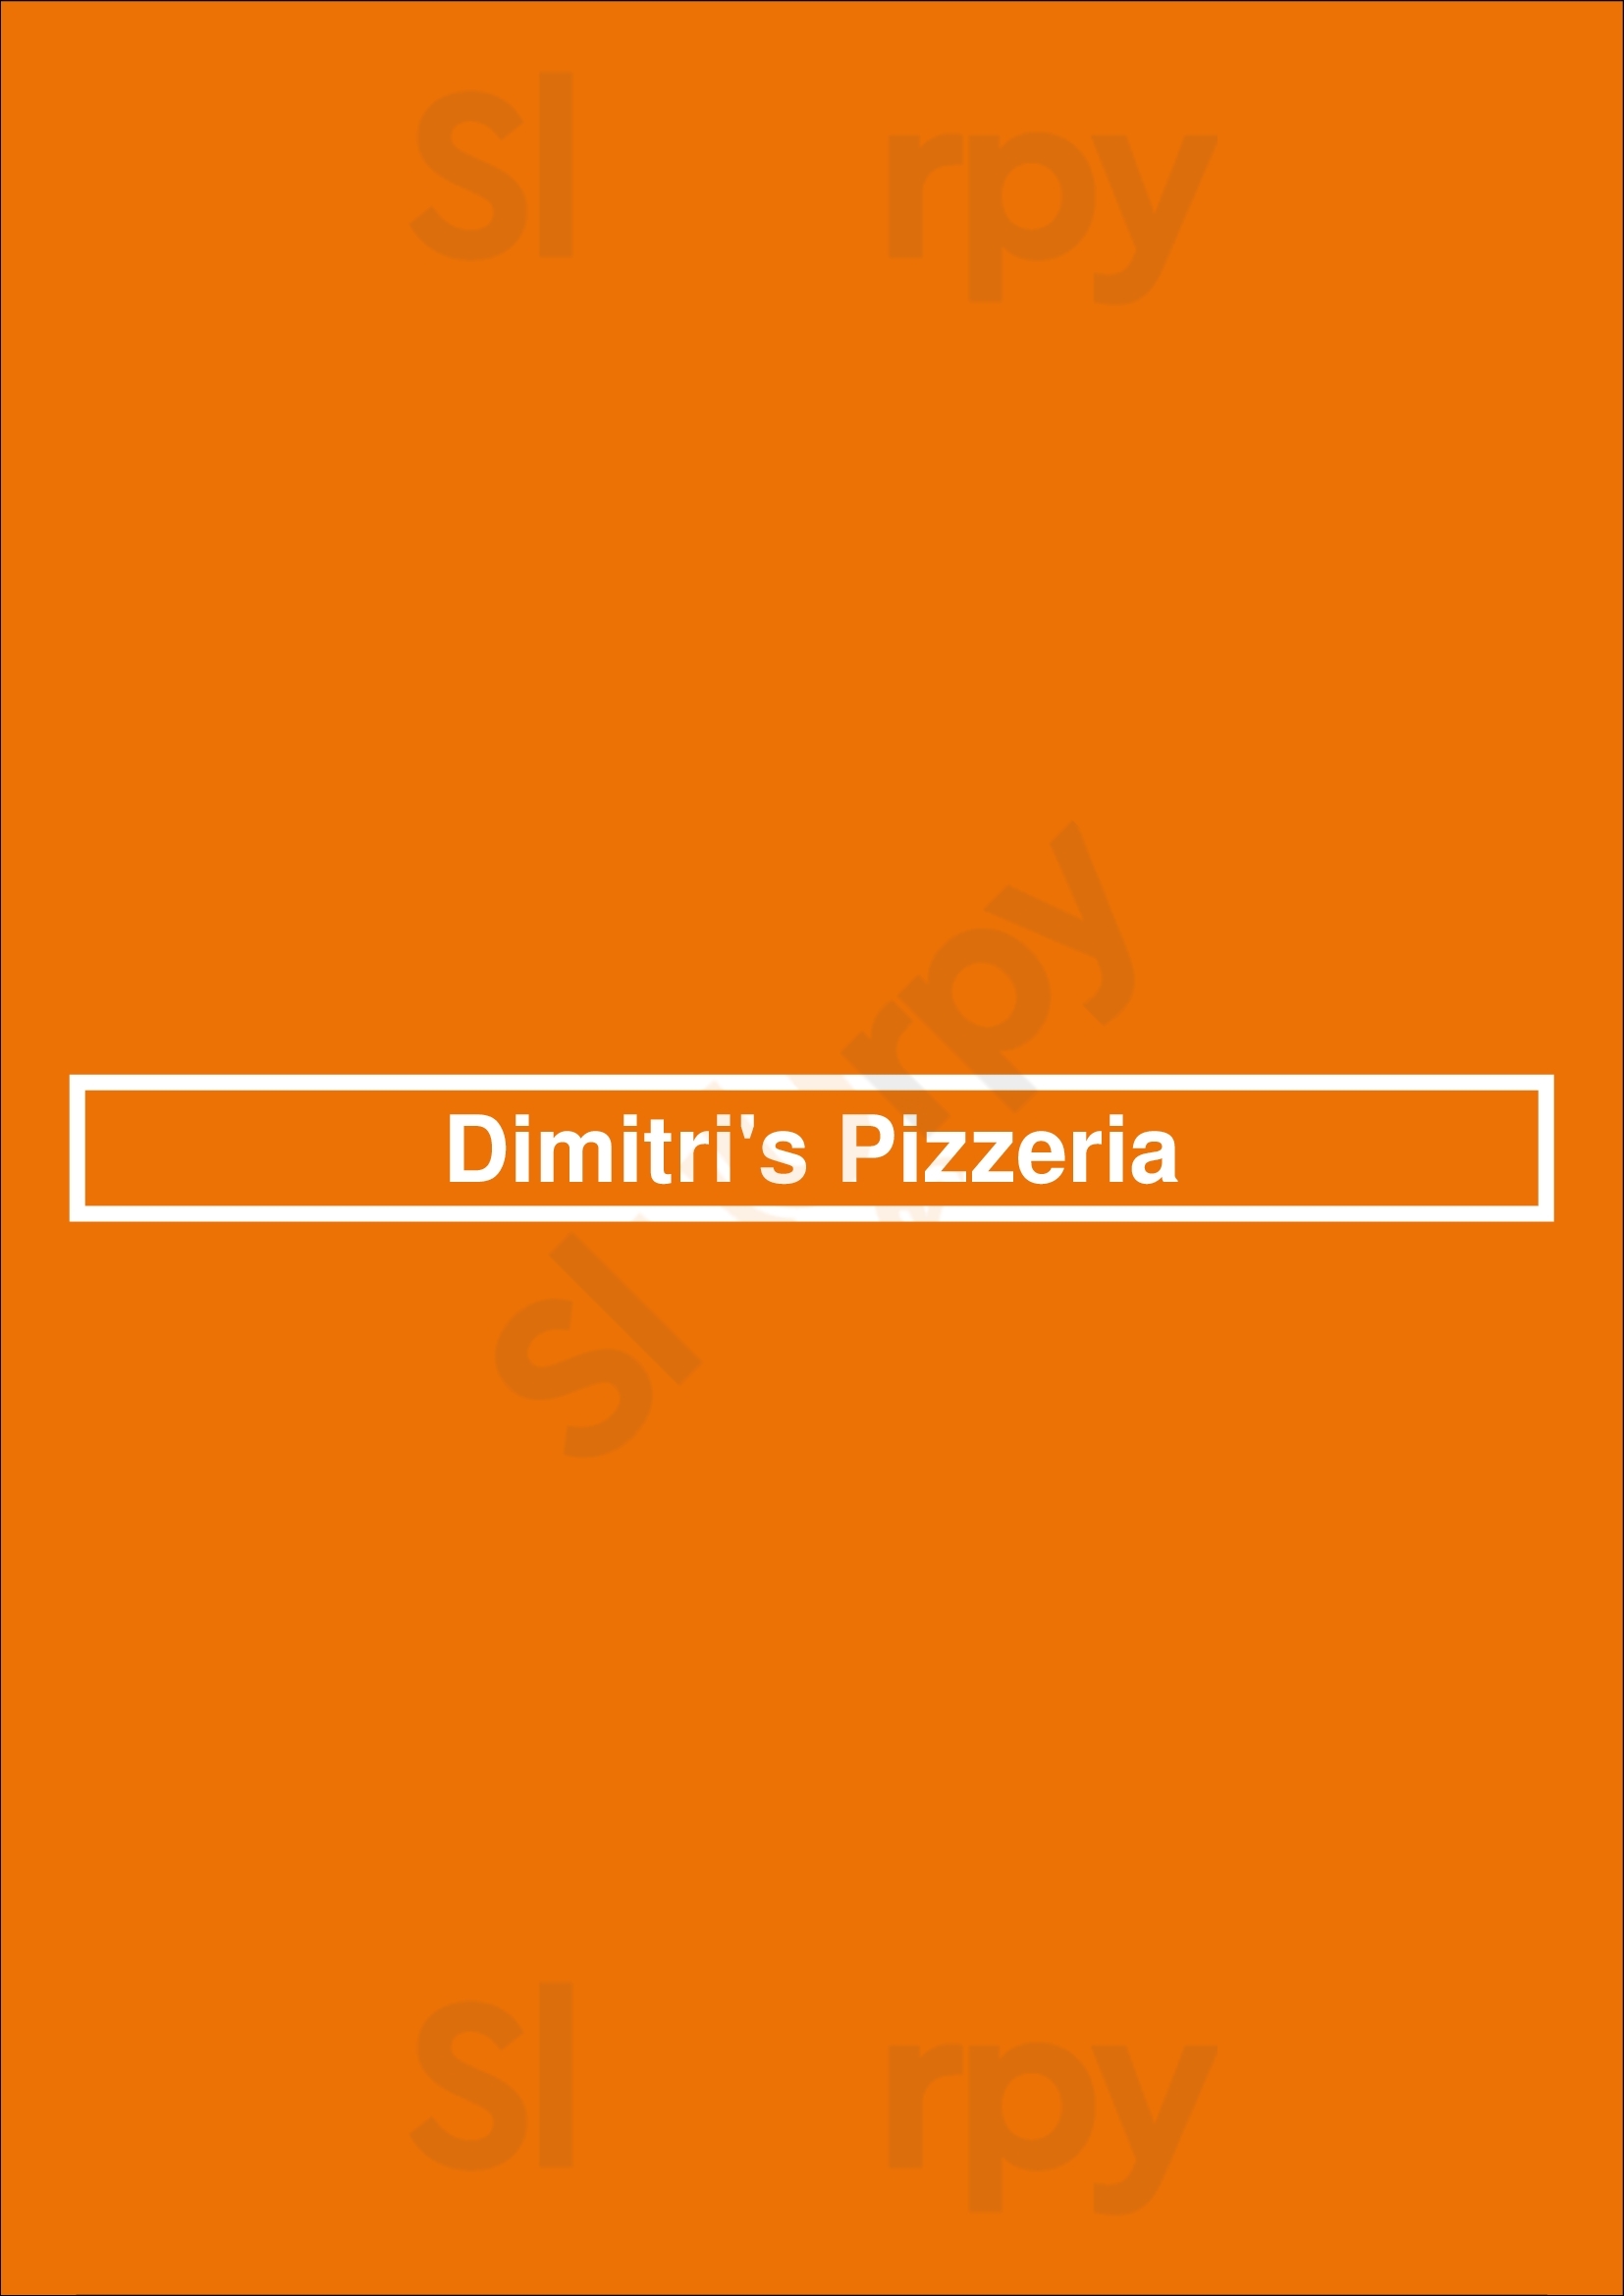 Dimitri's Pizzeria Sydney Menu - 1